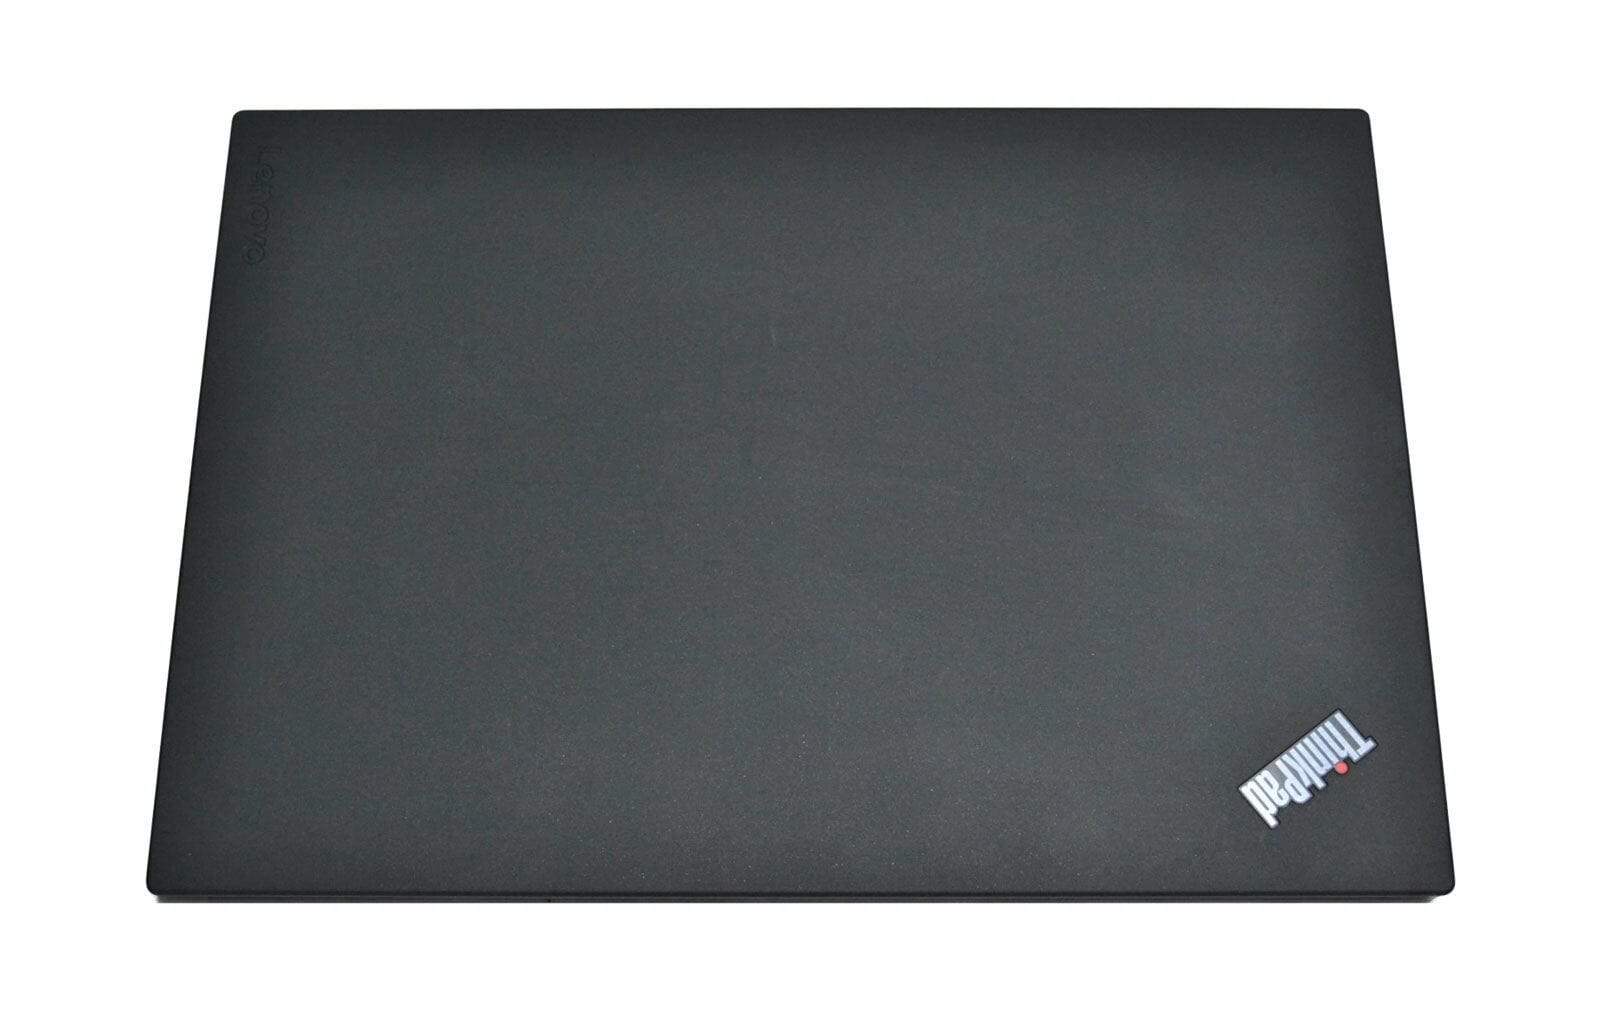 Lenovo ThinkPad P51s Laptop: Core i7-7500U, 16GB RAM, 256GB SSD, Warranty - CruiseTech